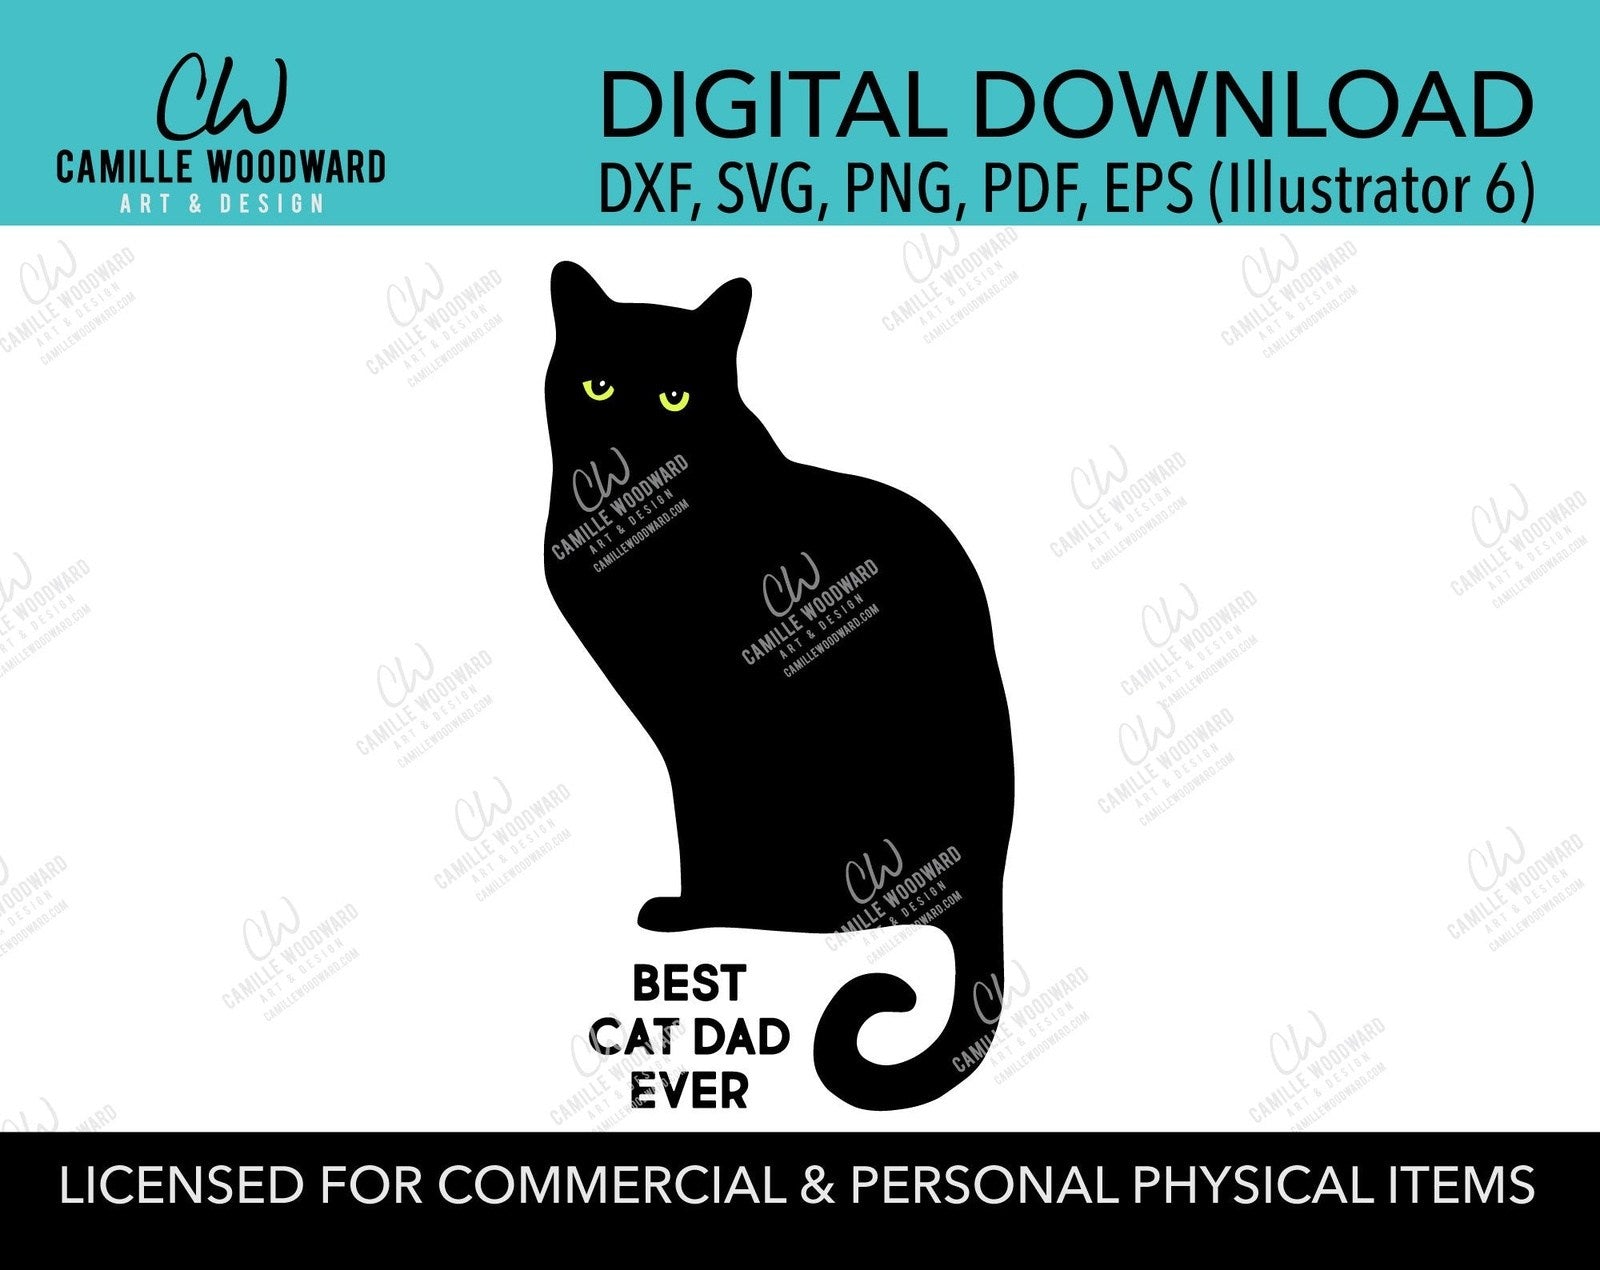 Download Best Cat Dad Ever Svg Digital Download Camille Woodward Art Design Yellowimages Mockups